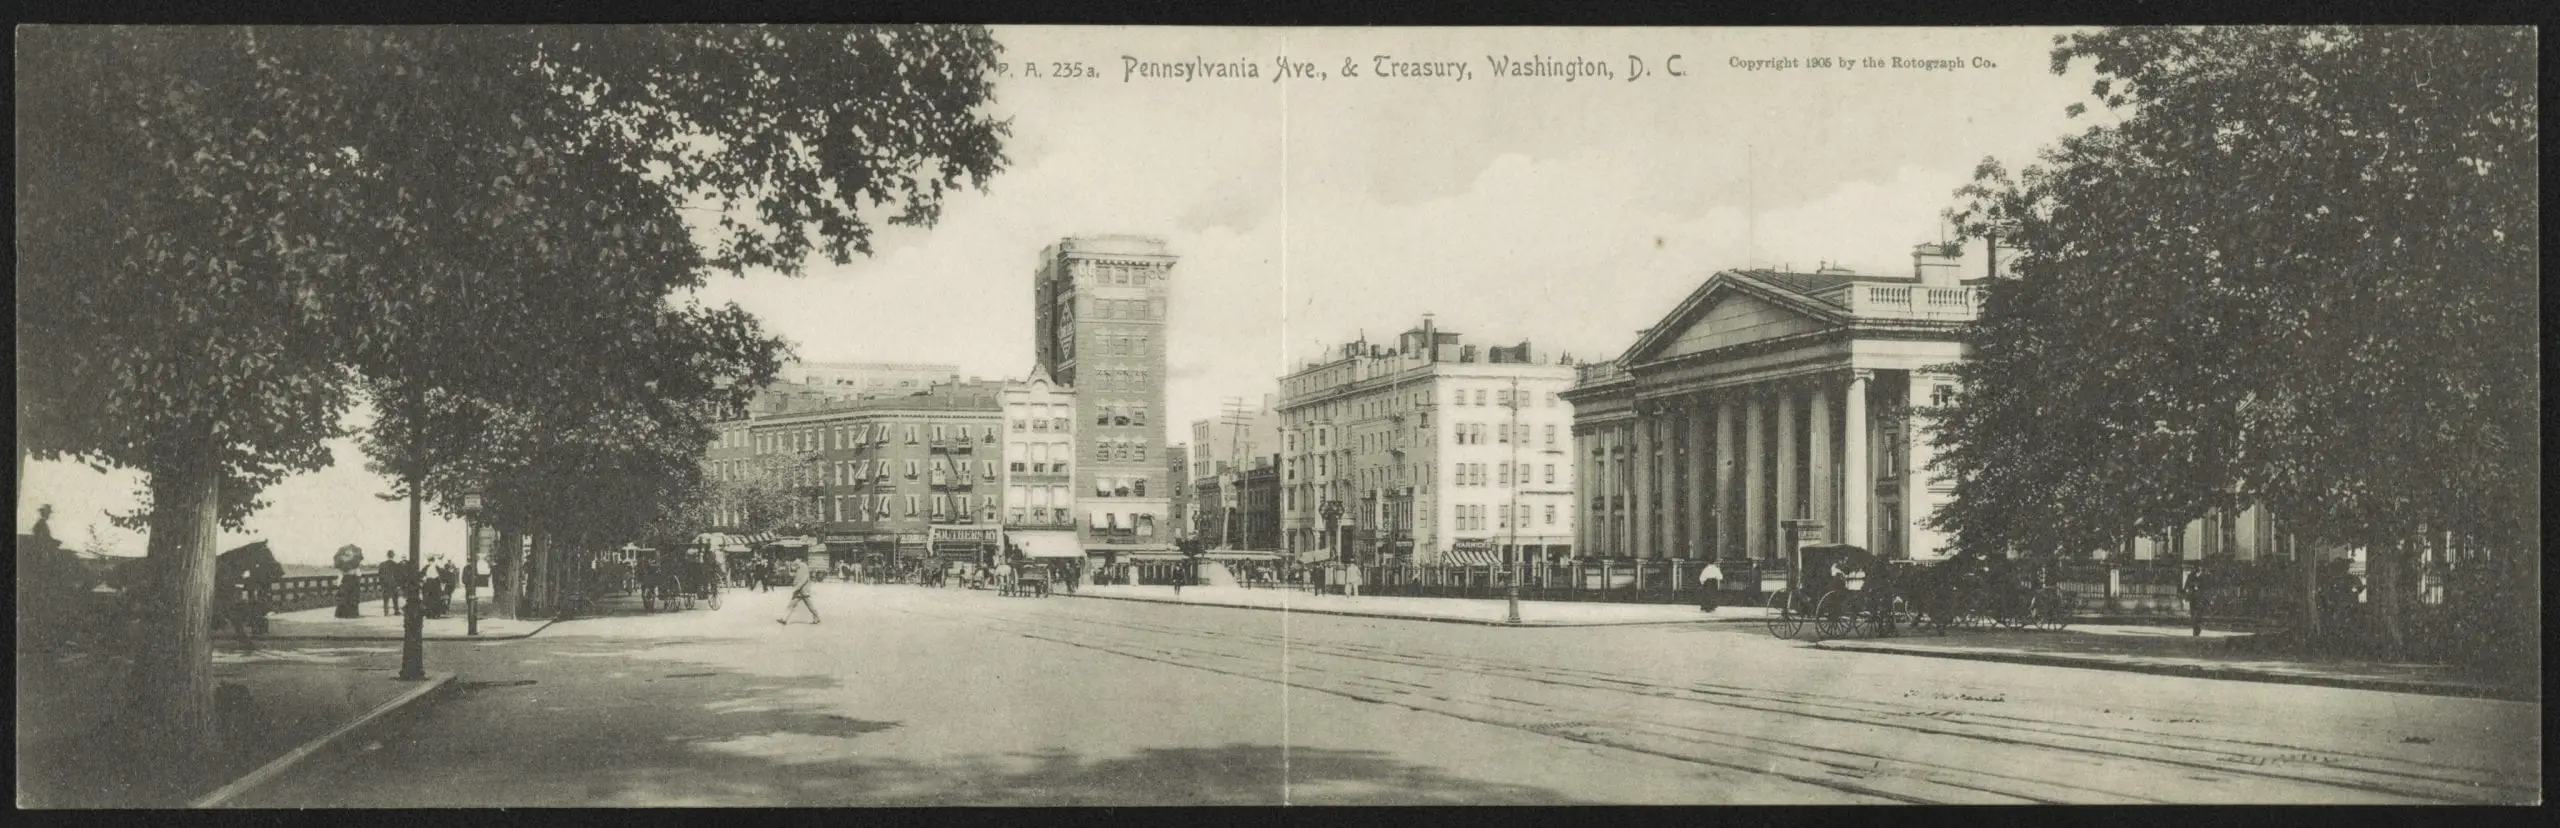 Pennsylvania Avenue view of the Treasury Department